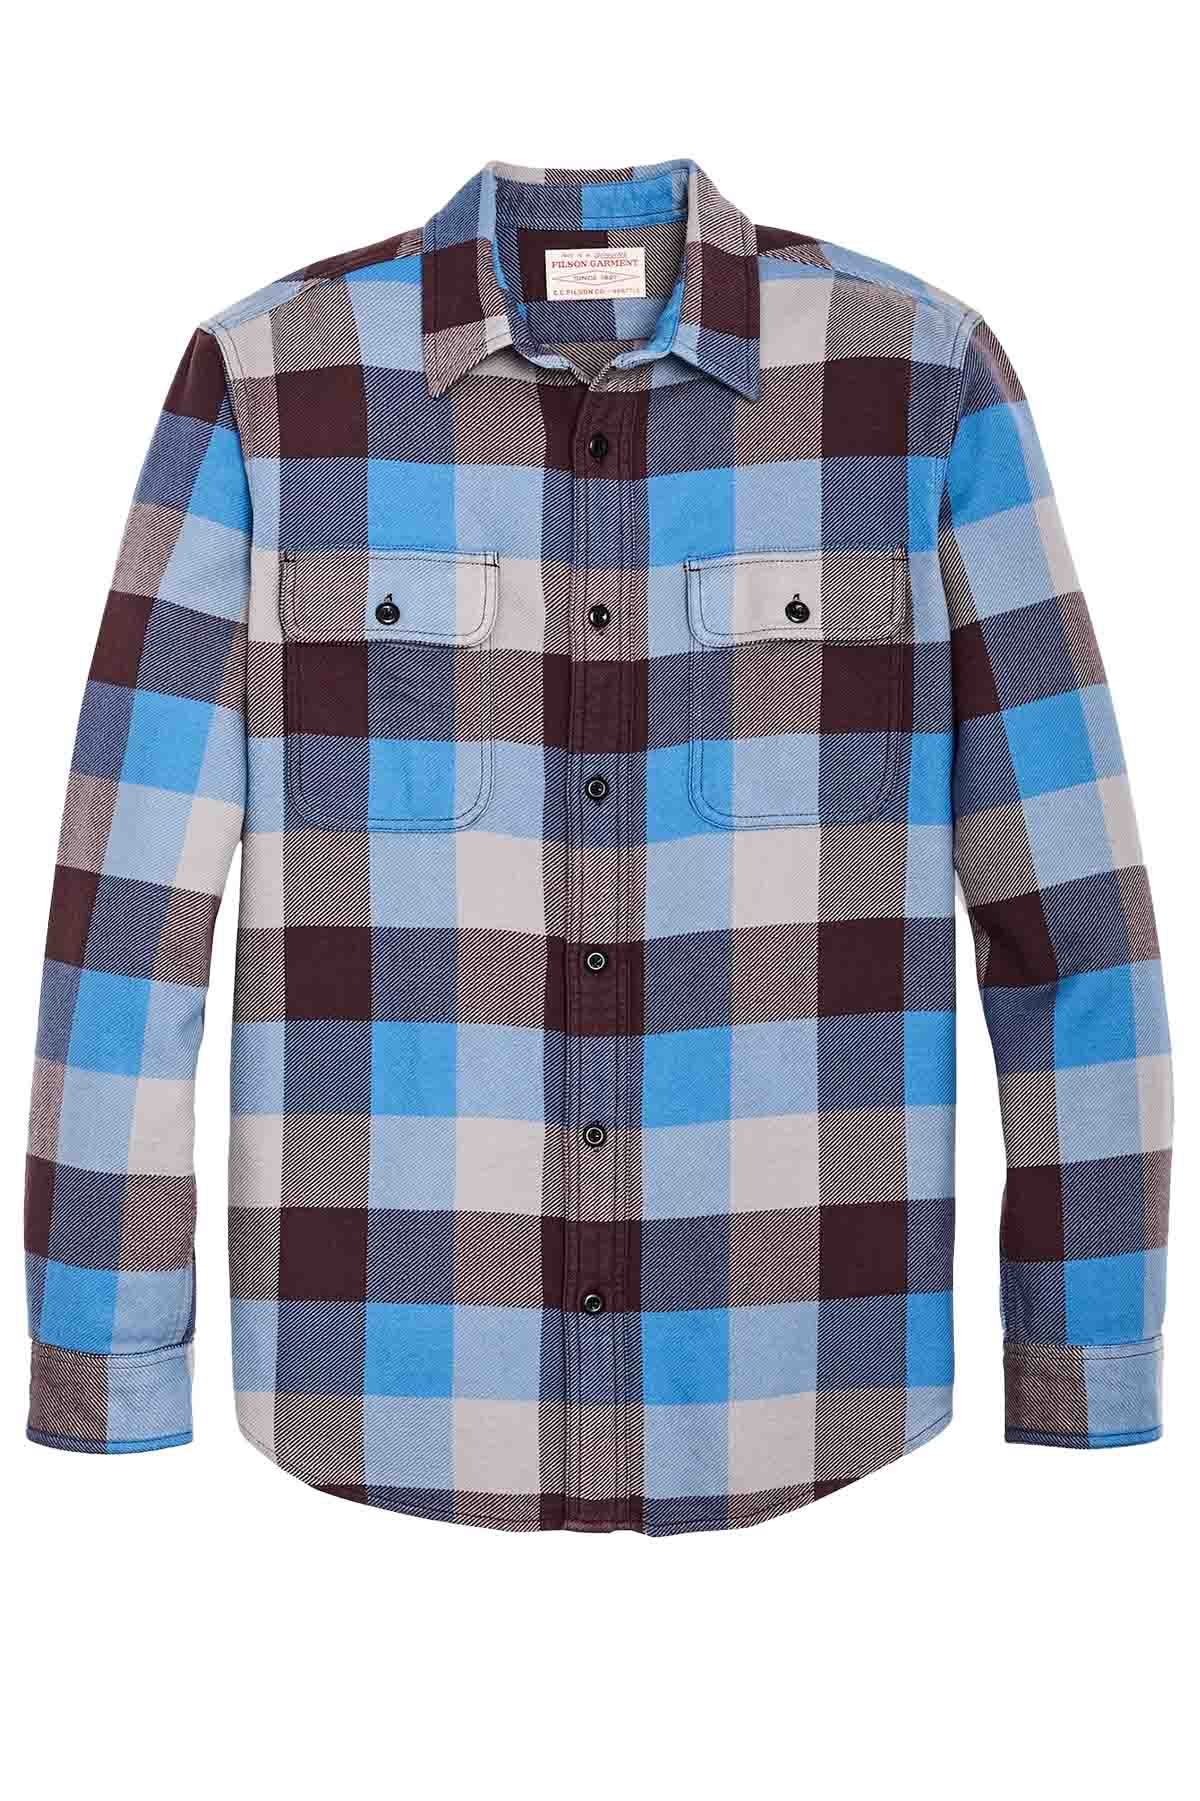 Filson - Vintage Flannel Workshirt - Blue/Maroon/Gray Check - Front